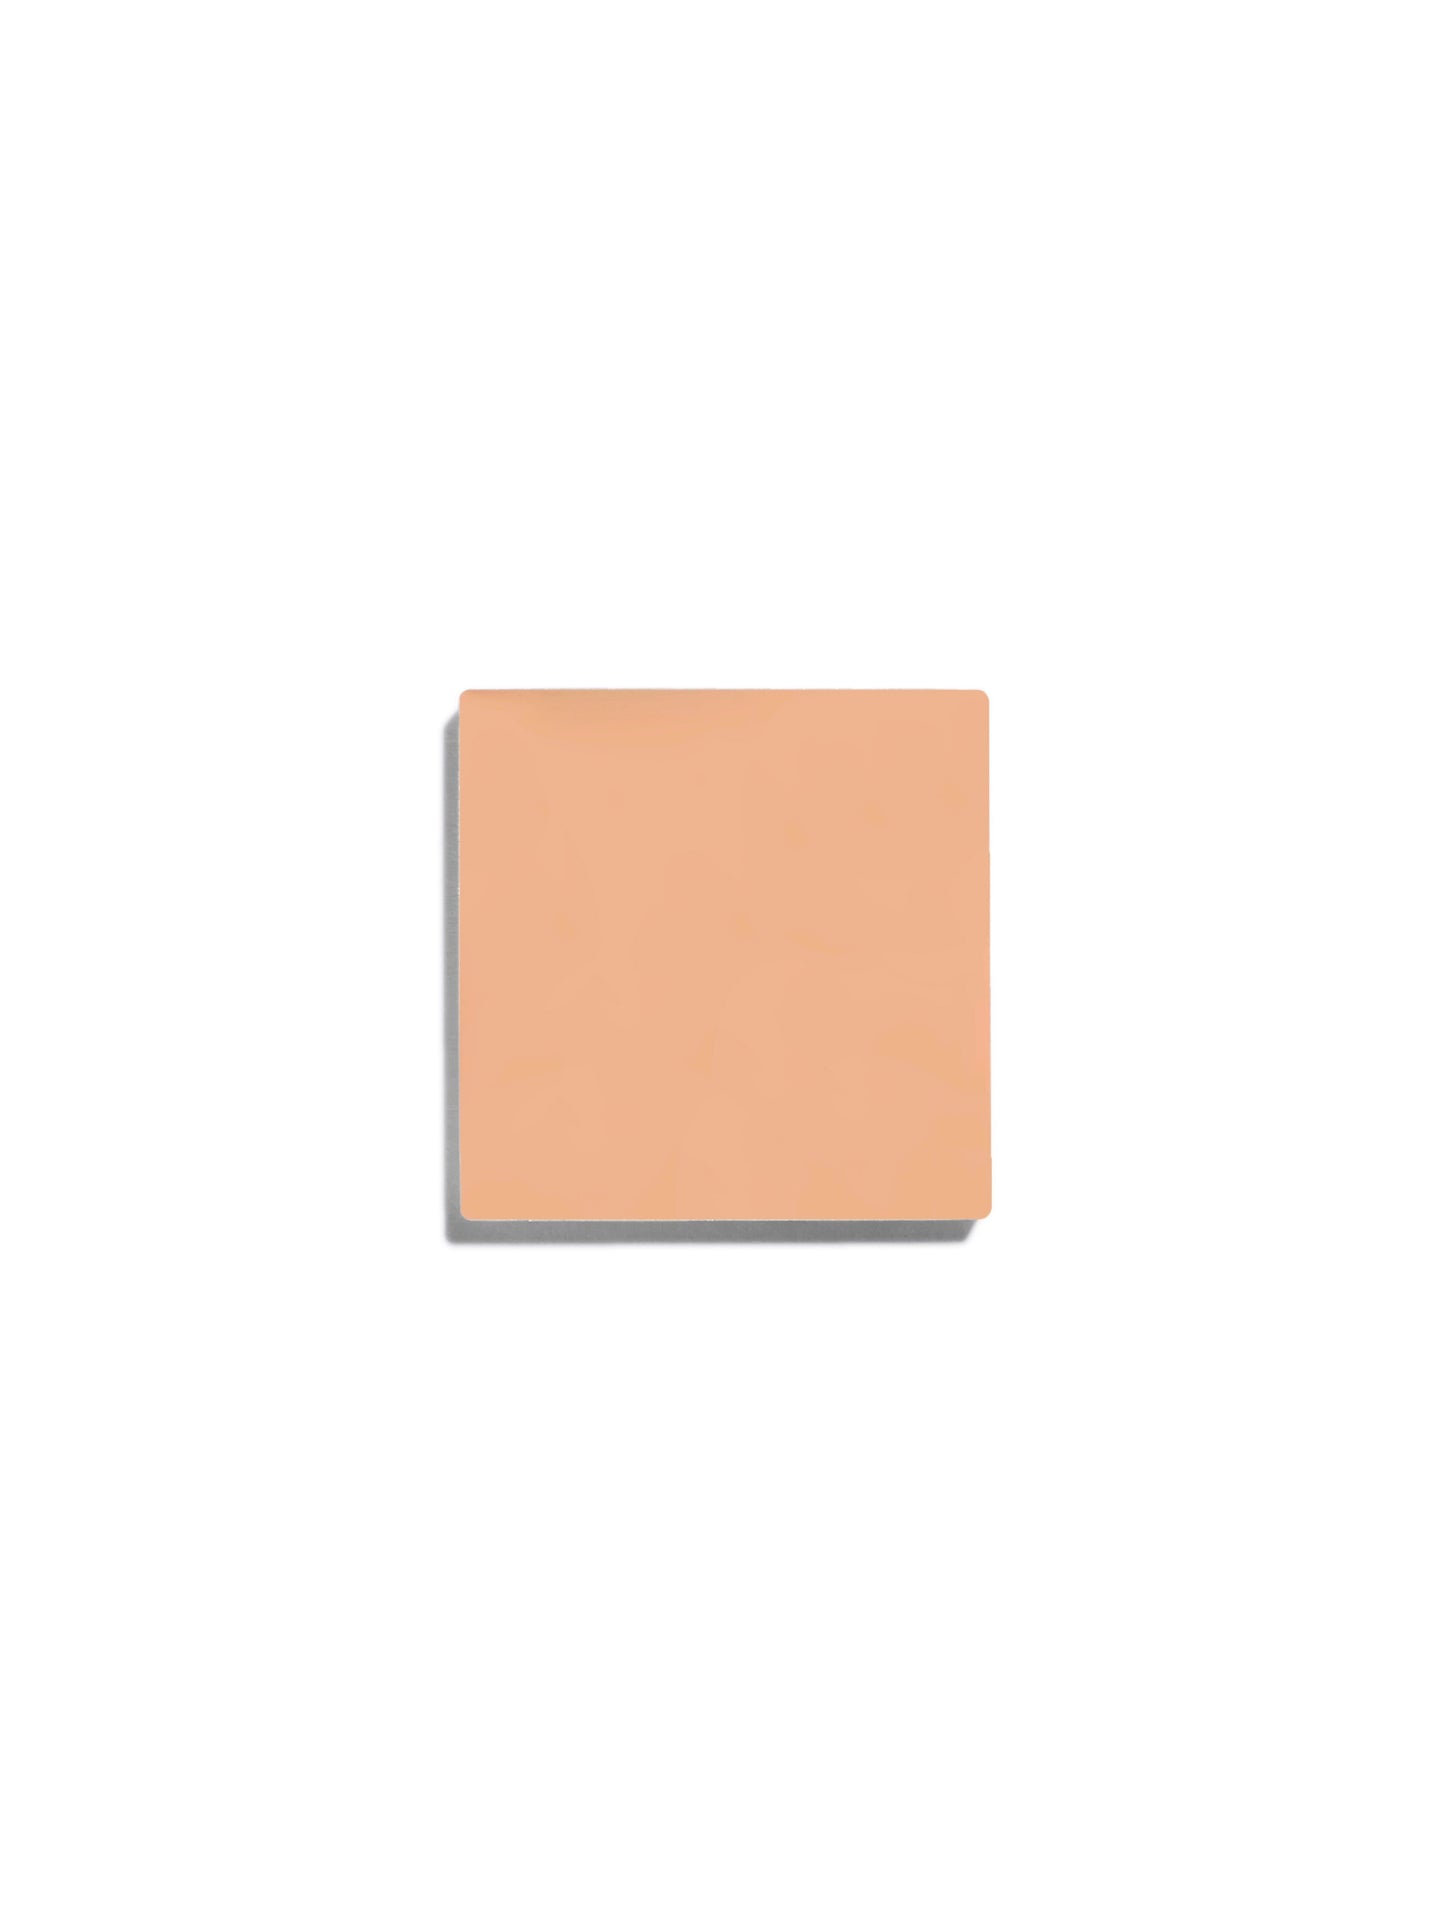 Paper Thin (for fair-medium skin with pink undertones)